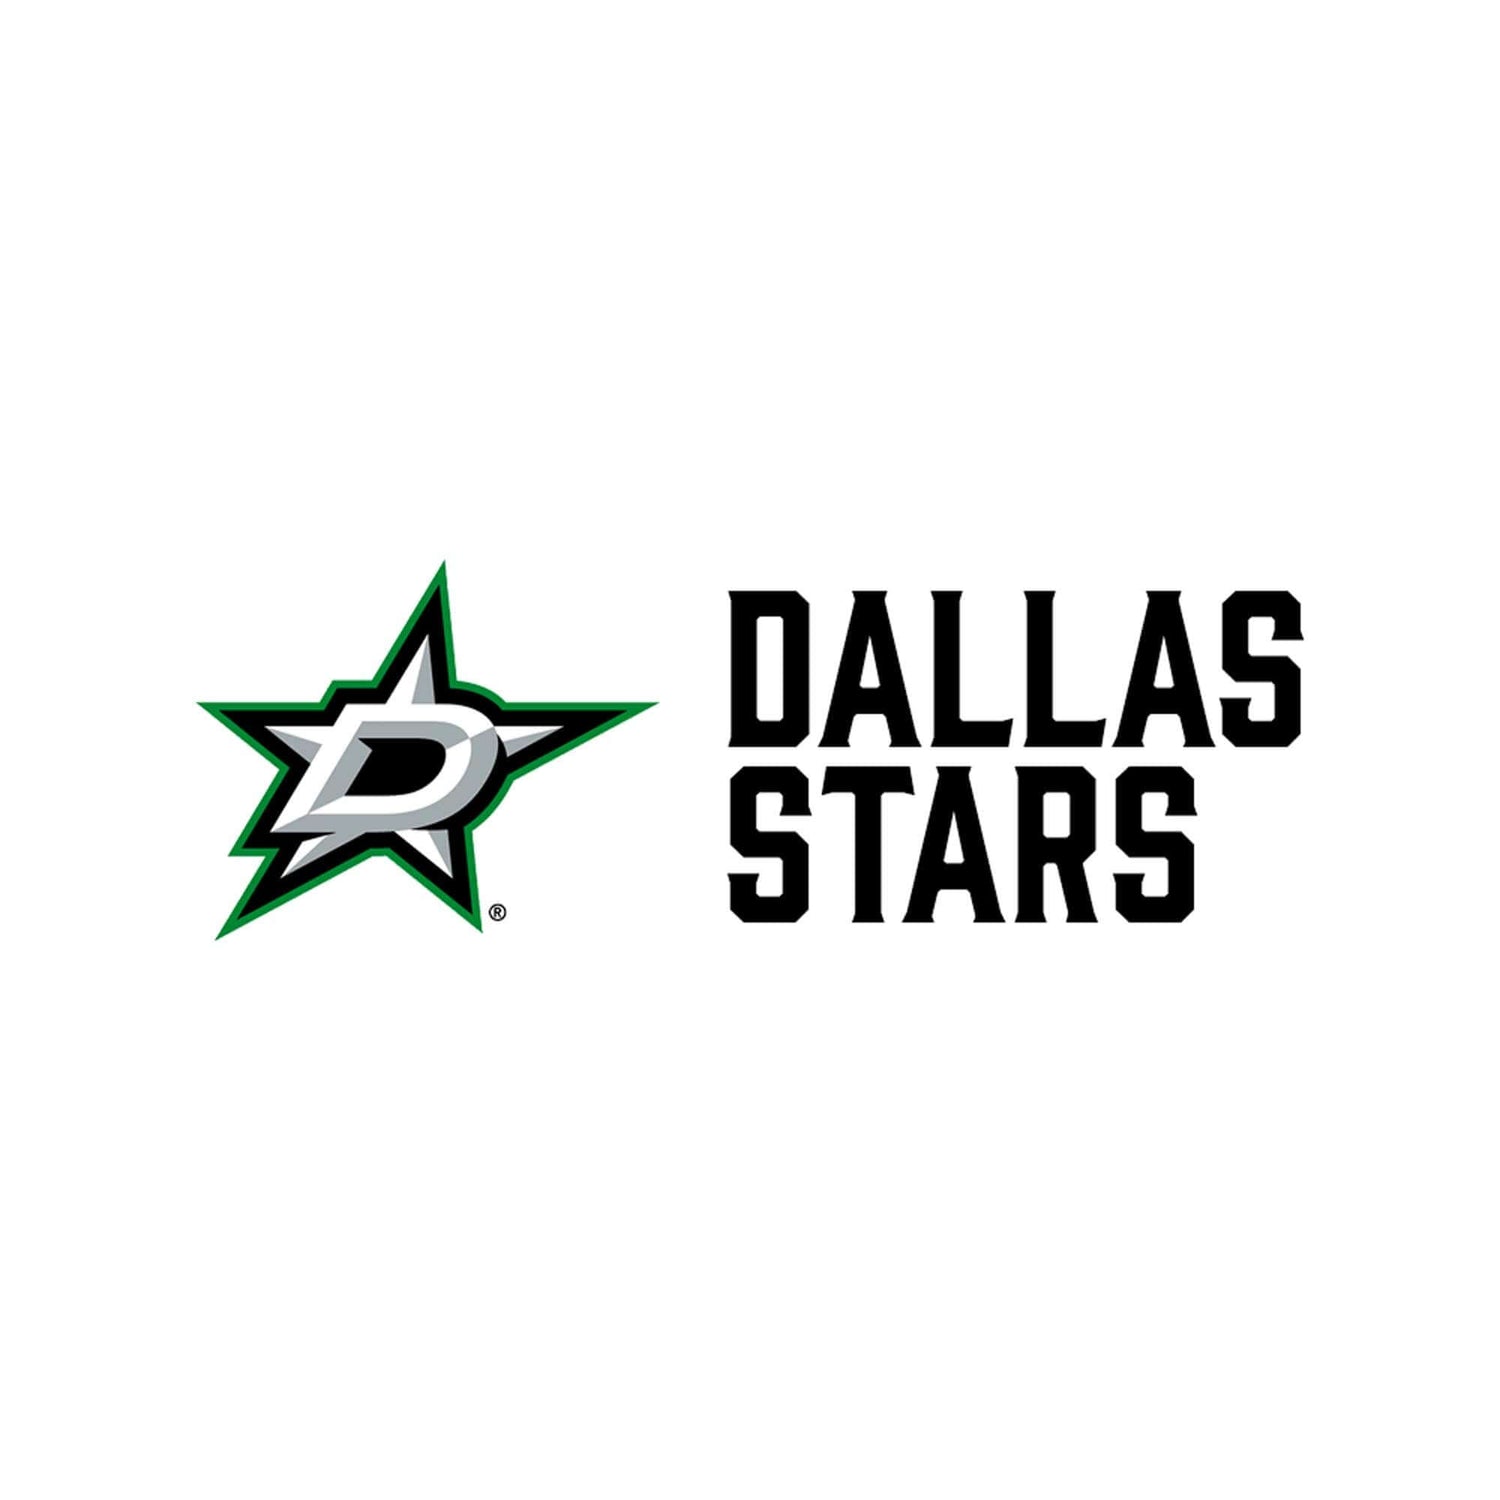 Dallas Stars Shadow Hat